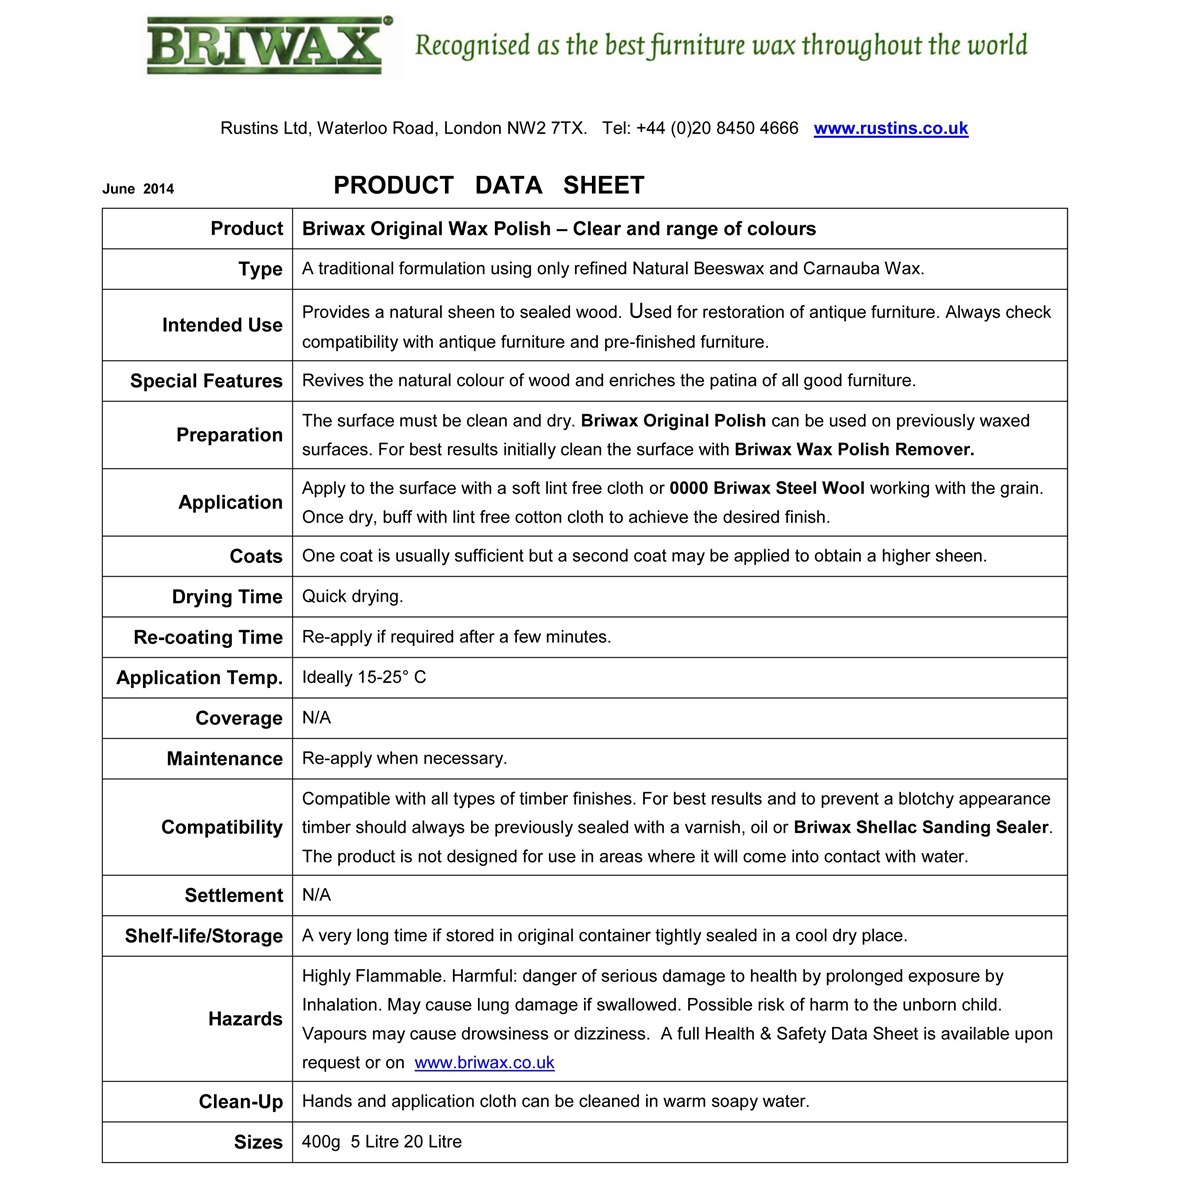 How to use Briwax Original Wax Furniture polish